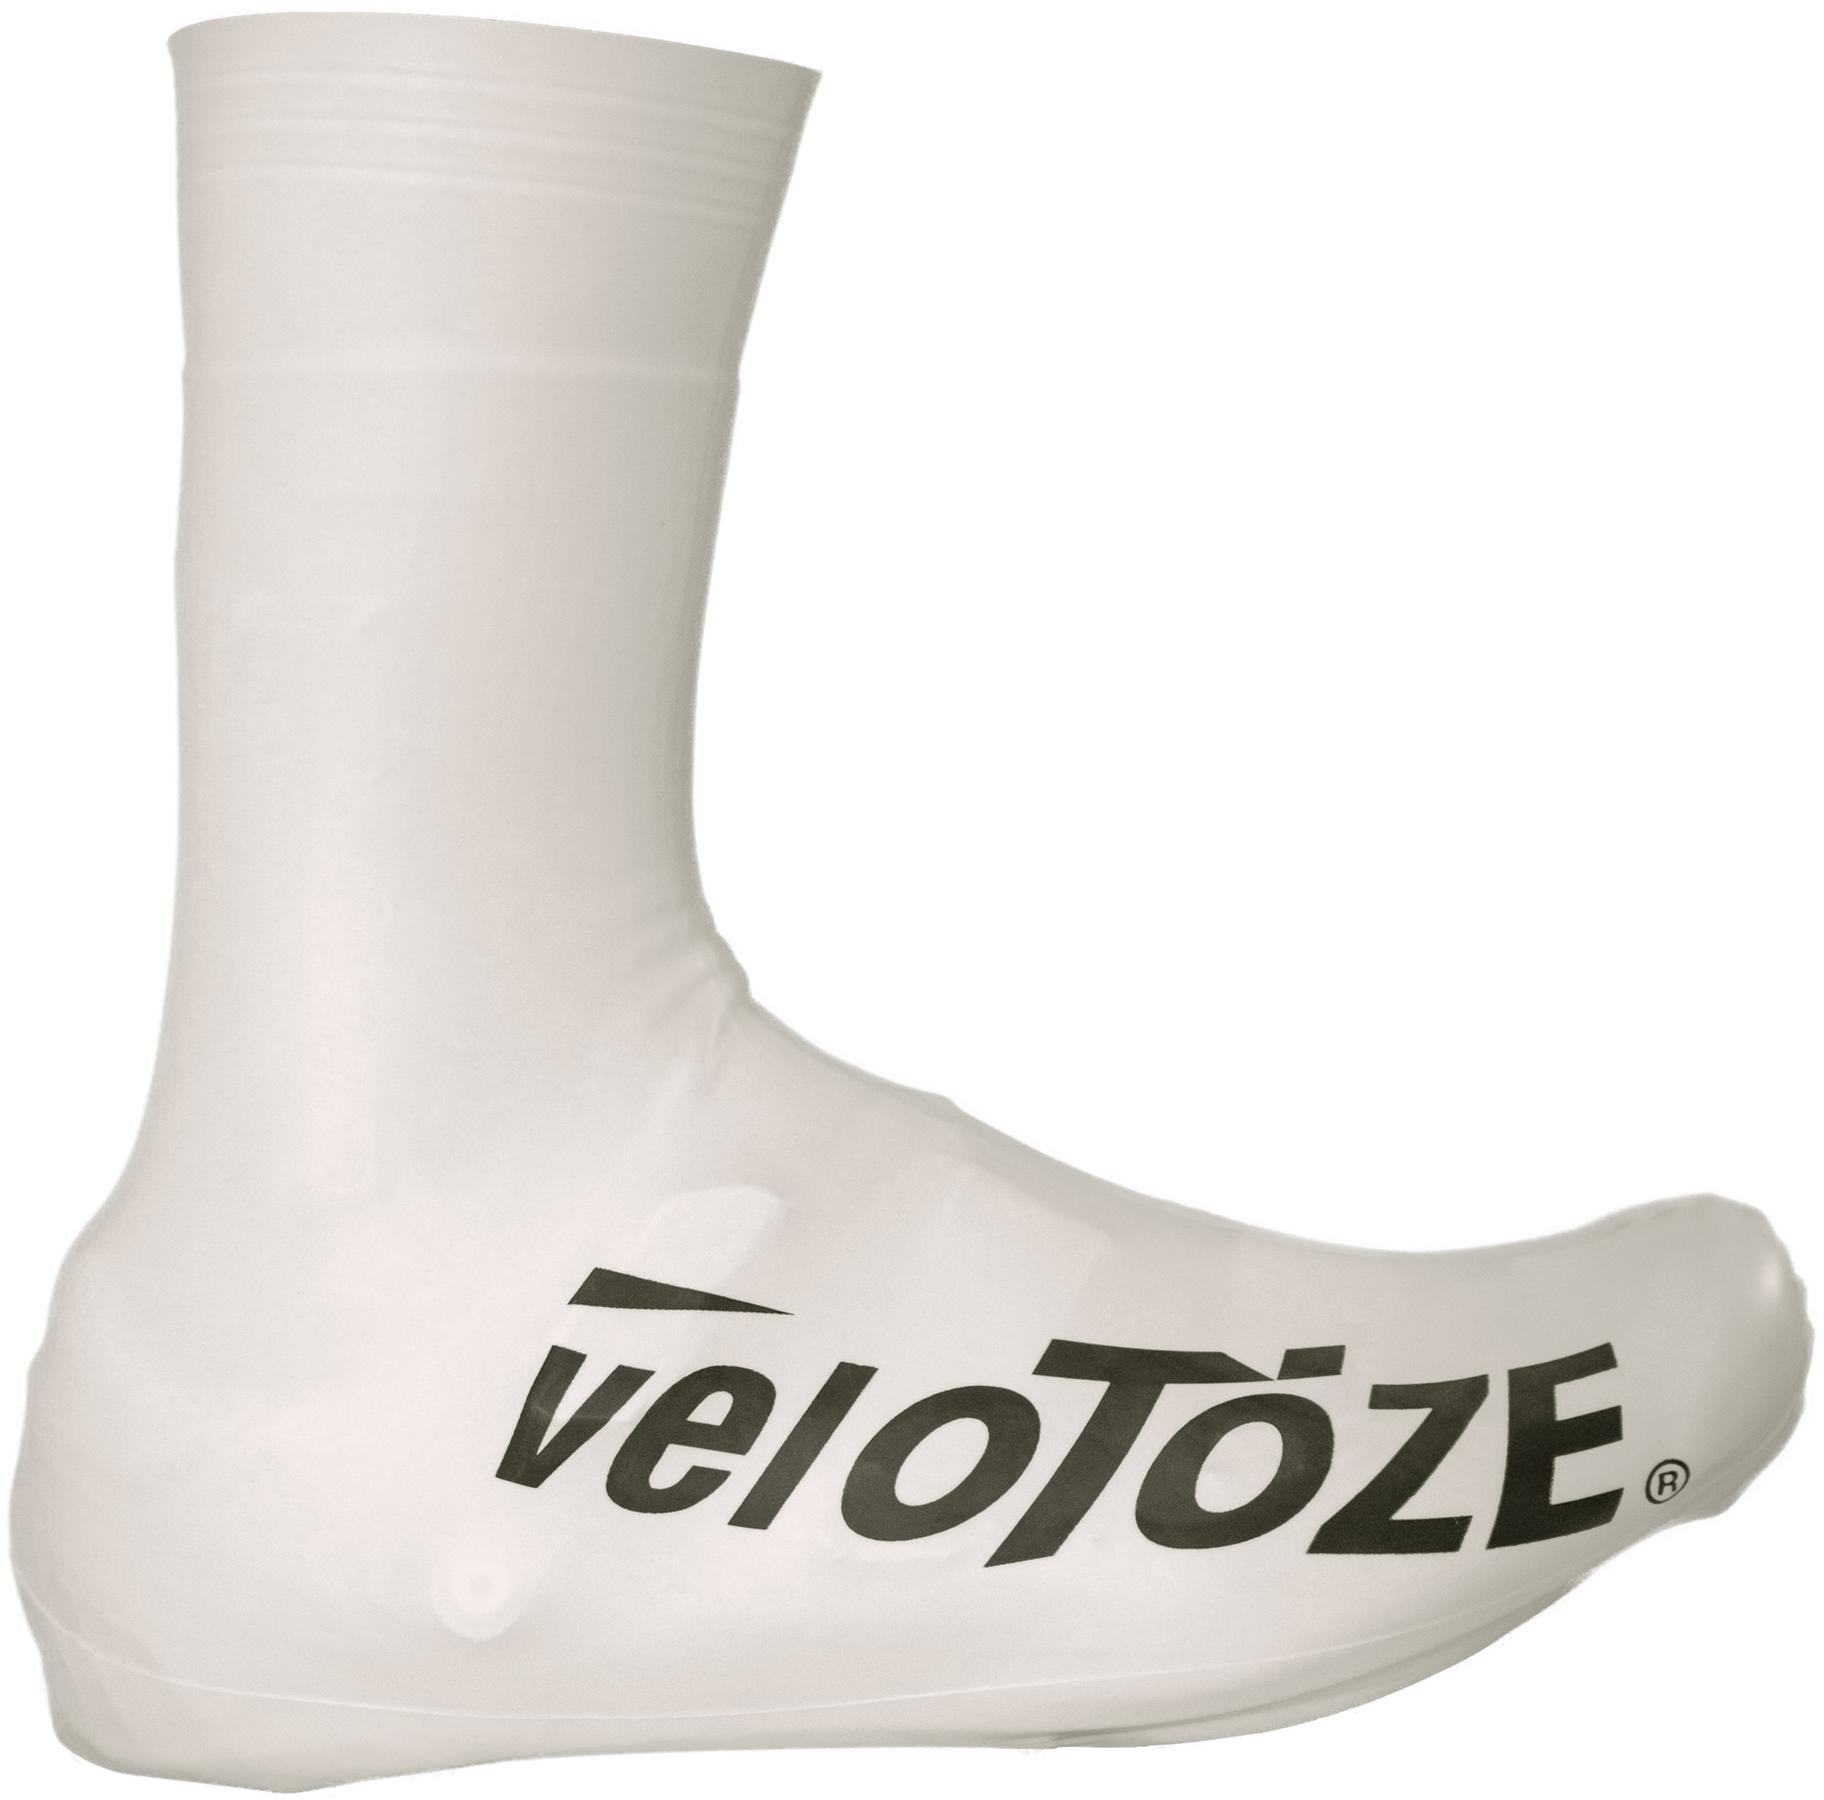 Velotoze Tall Shoe Covers 2.0  White